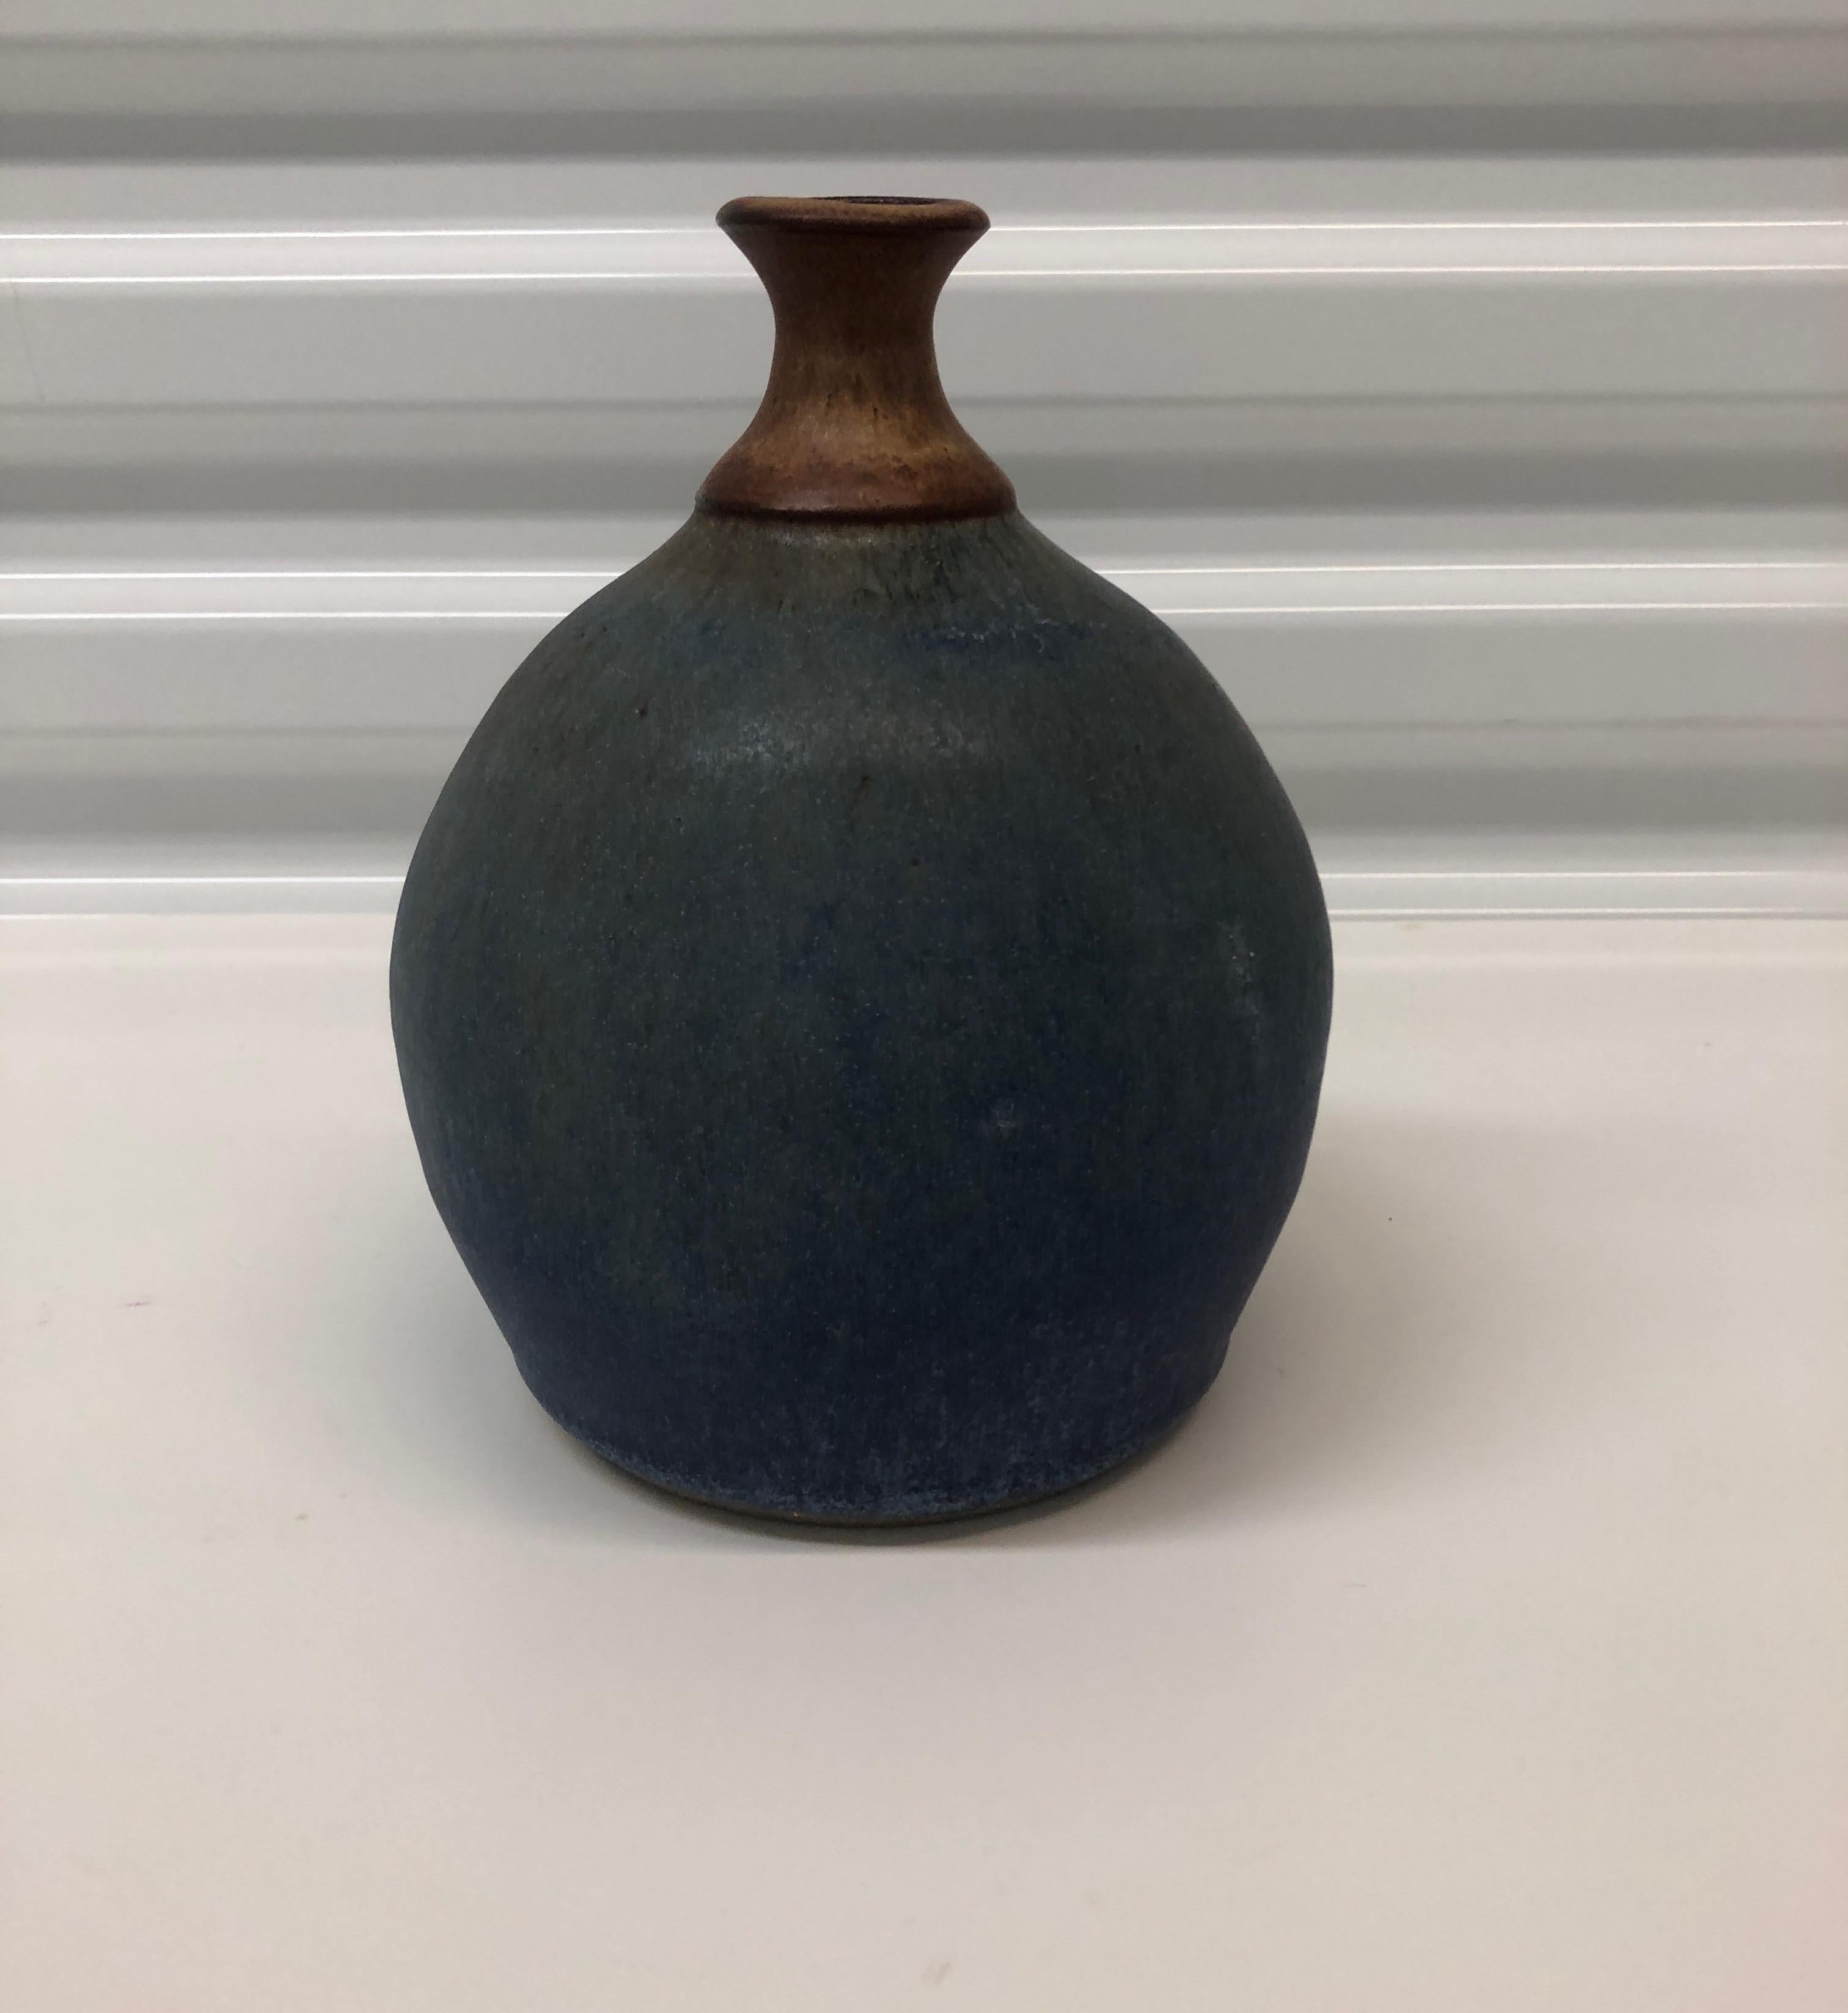 Vintage earthenware round turquoise vase.
Size: 6” D x 8” H.